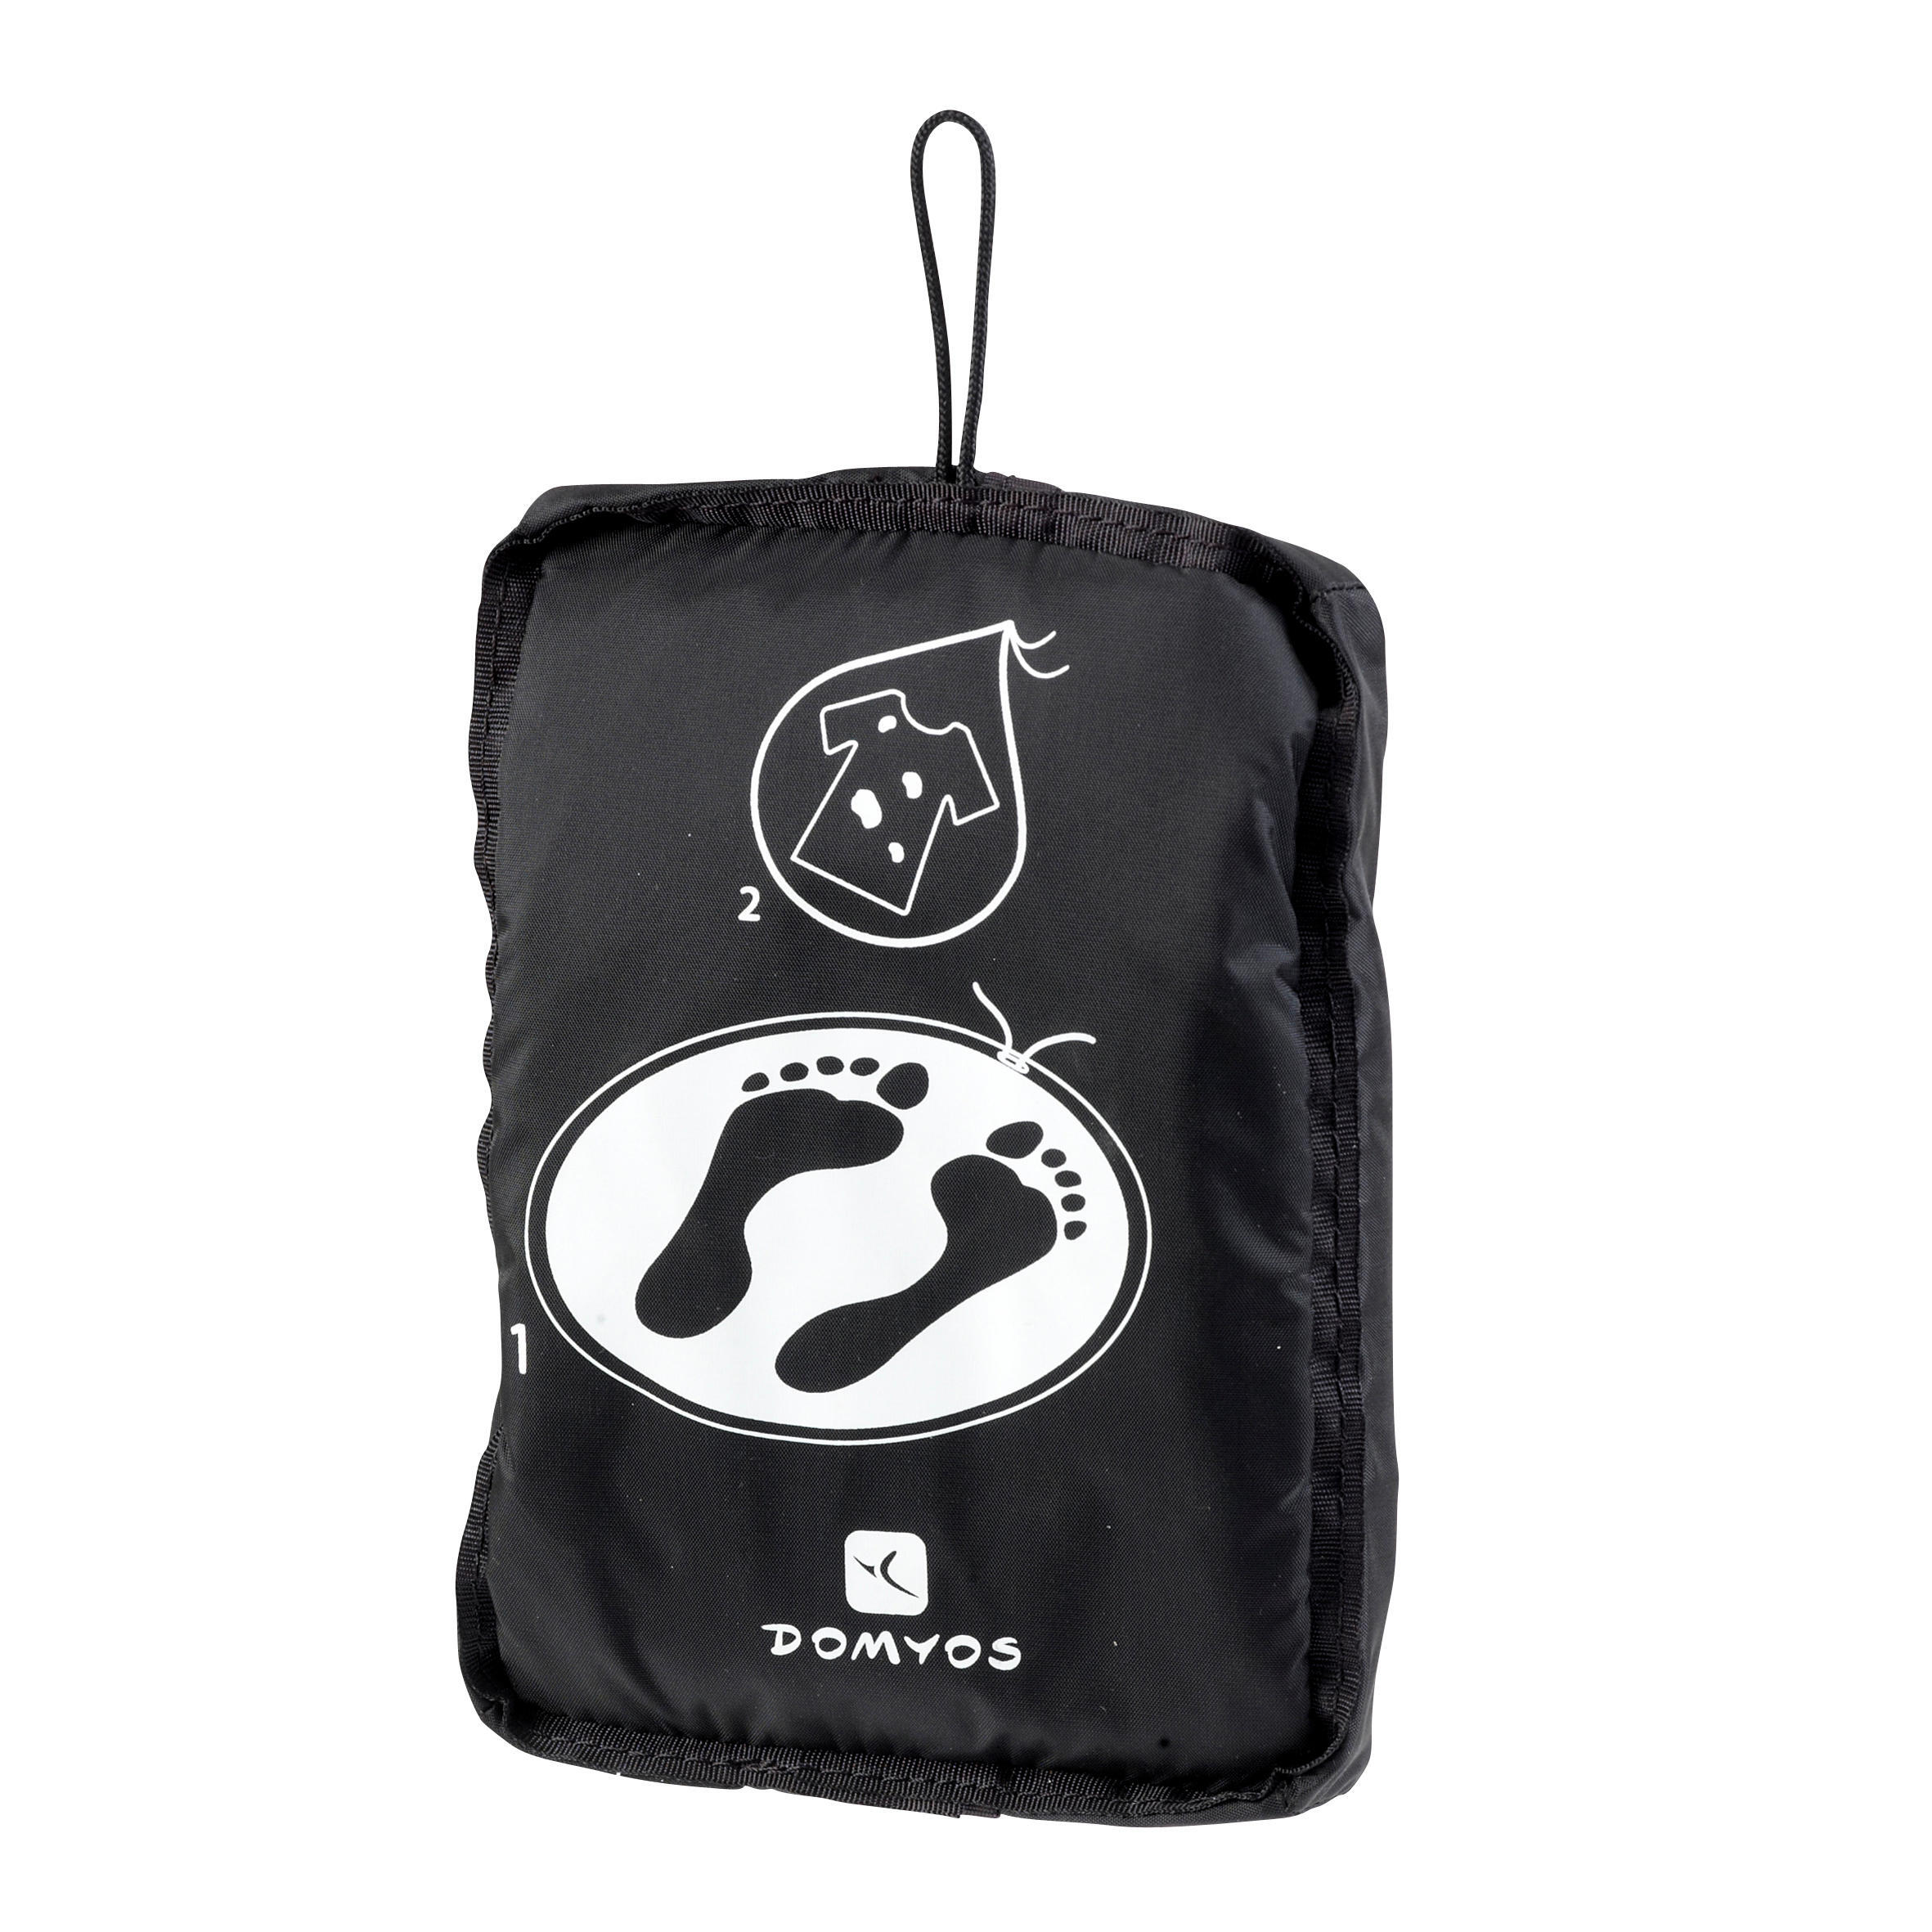 PTWO Fitness Bag - Black 1/5